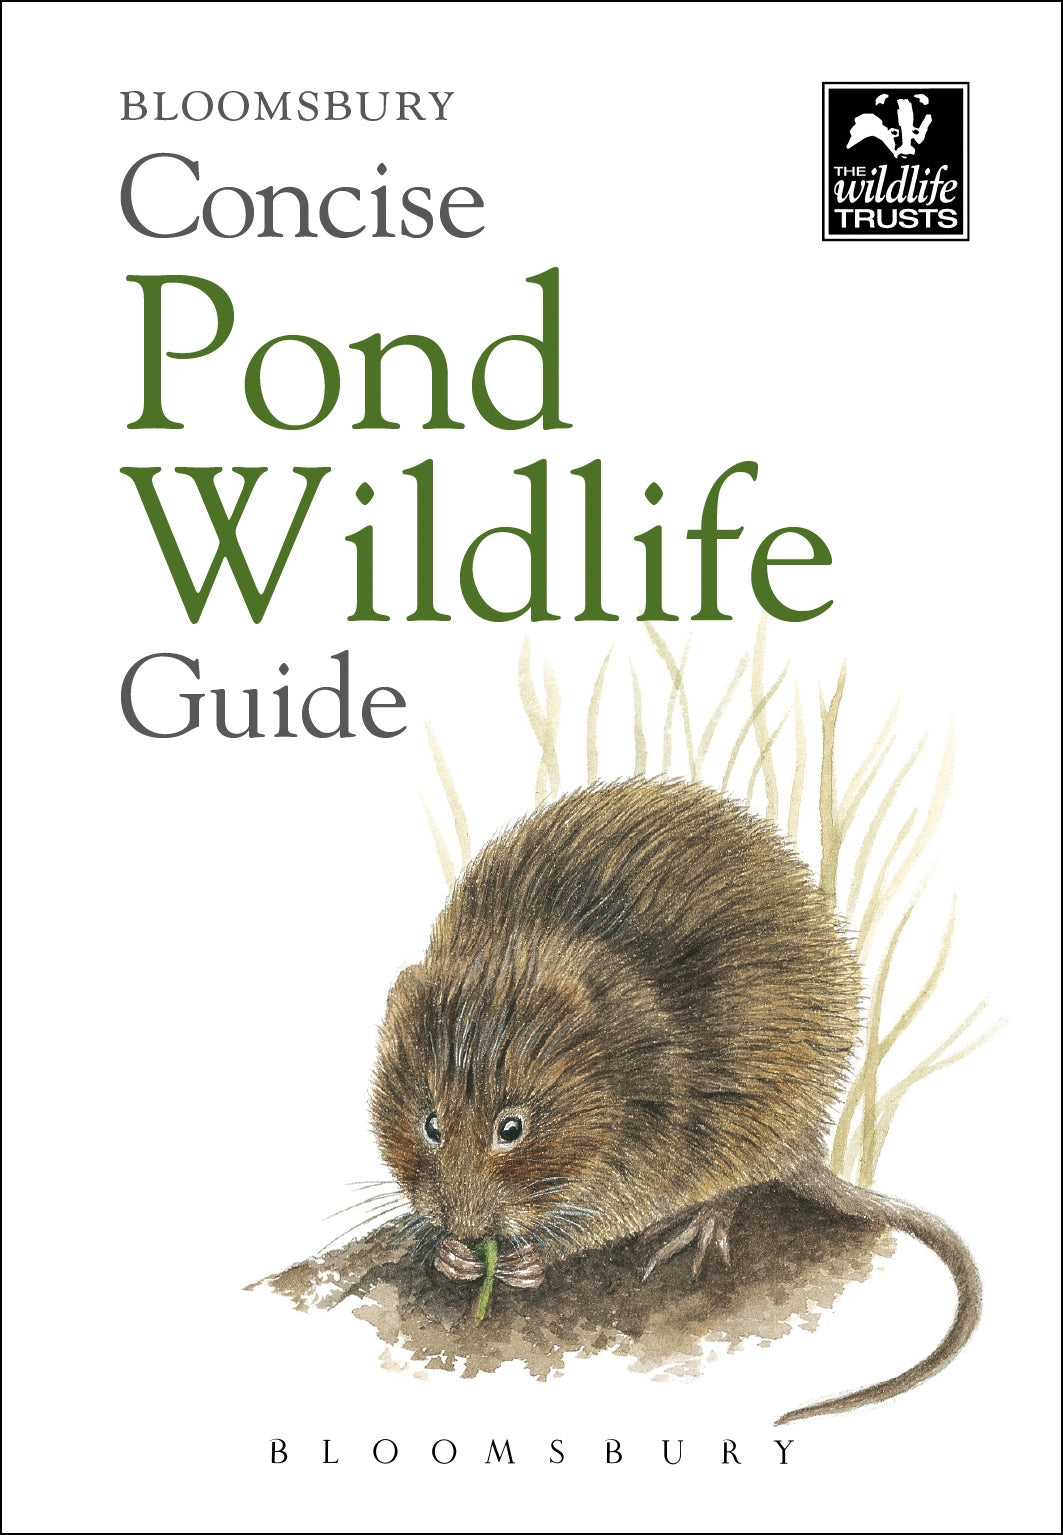 Bloomsbury concise guide - pond wildlife